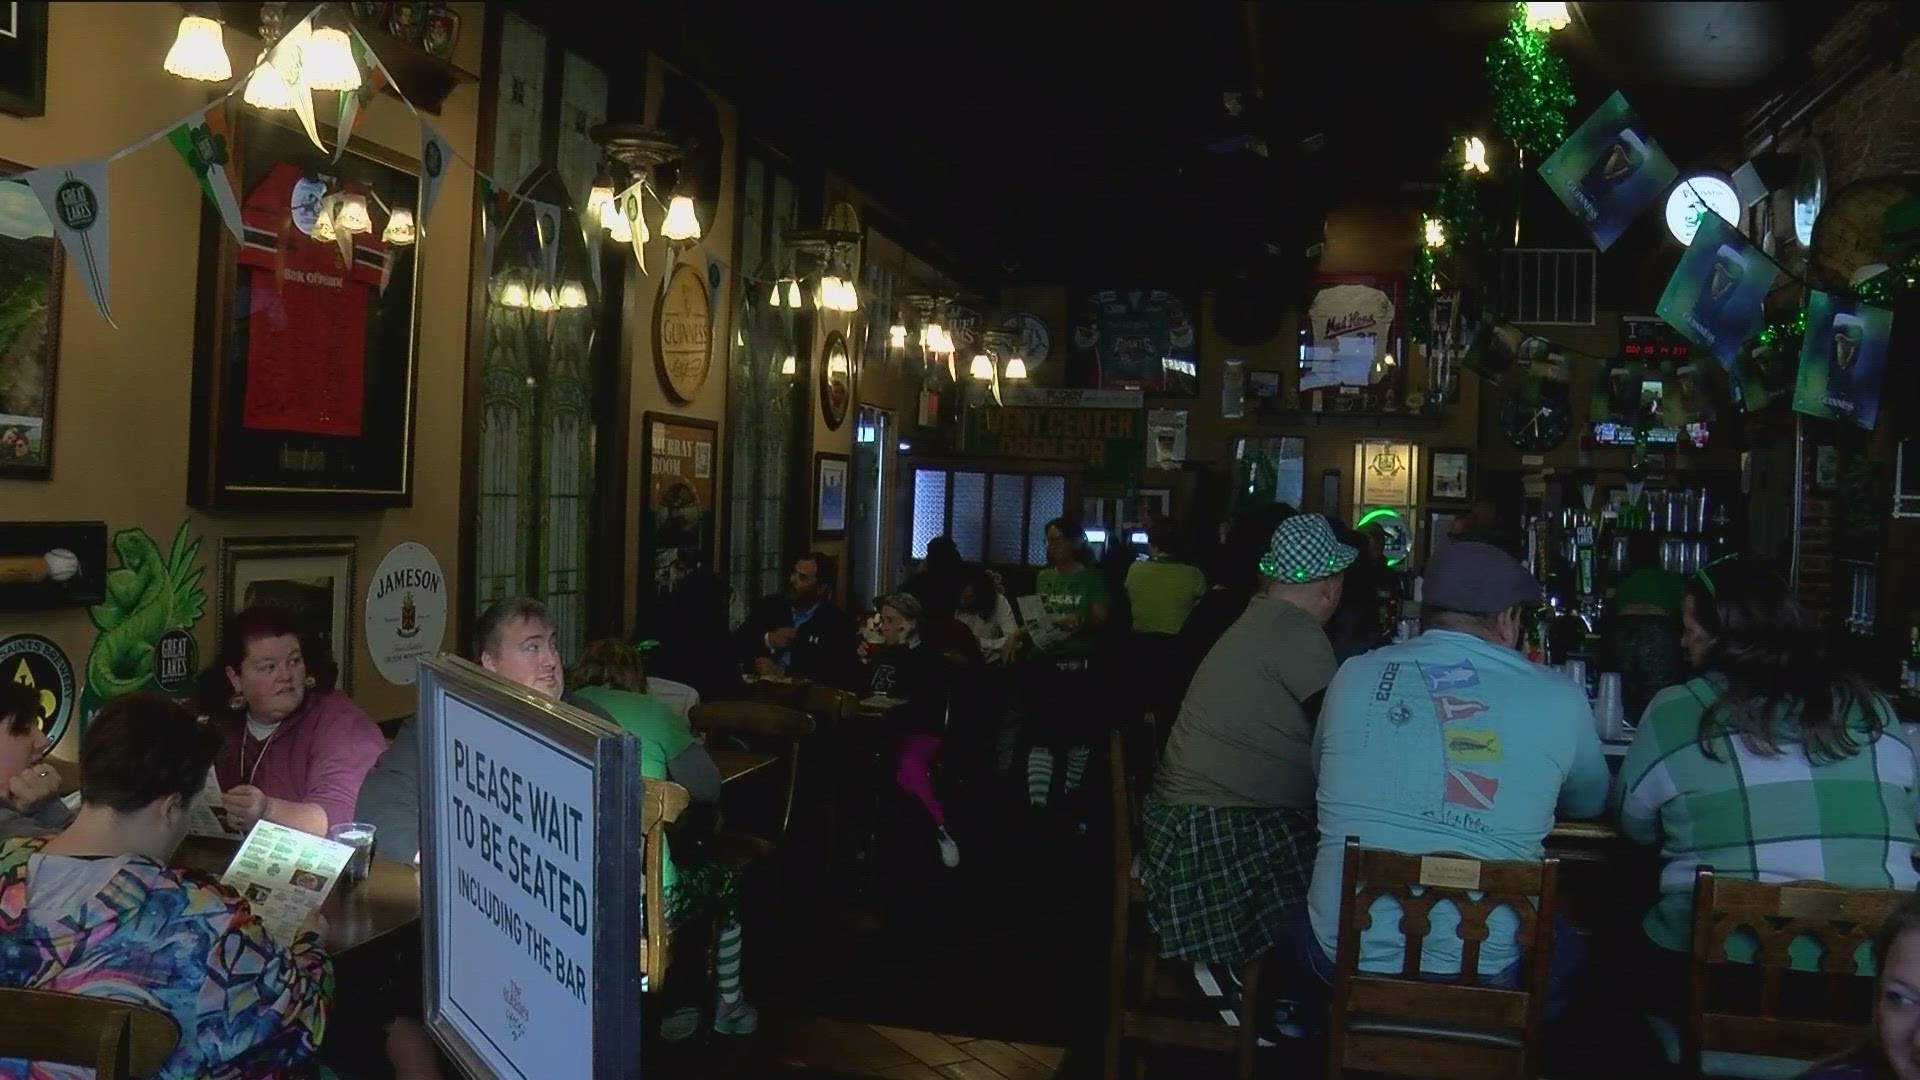 Many Toledoans were already wearing green and having fun Friday night ahead of Sunday's festivities.